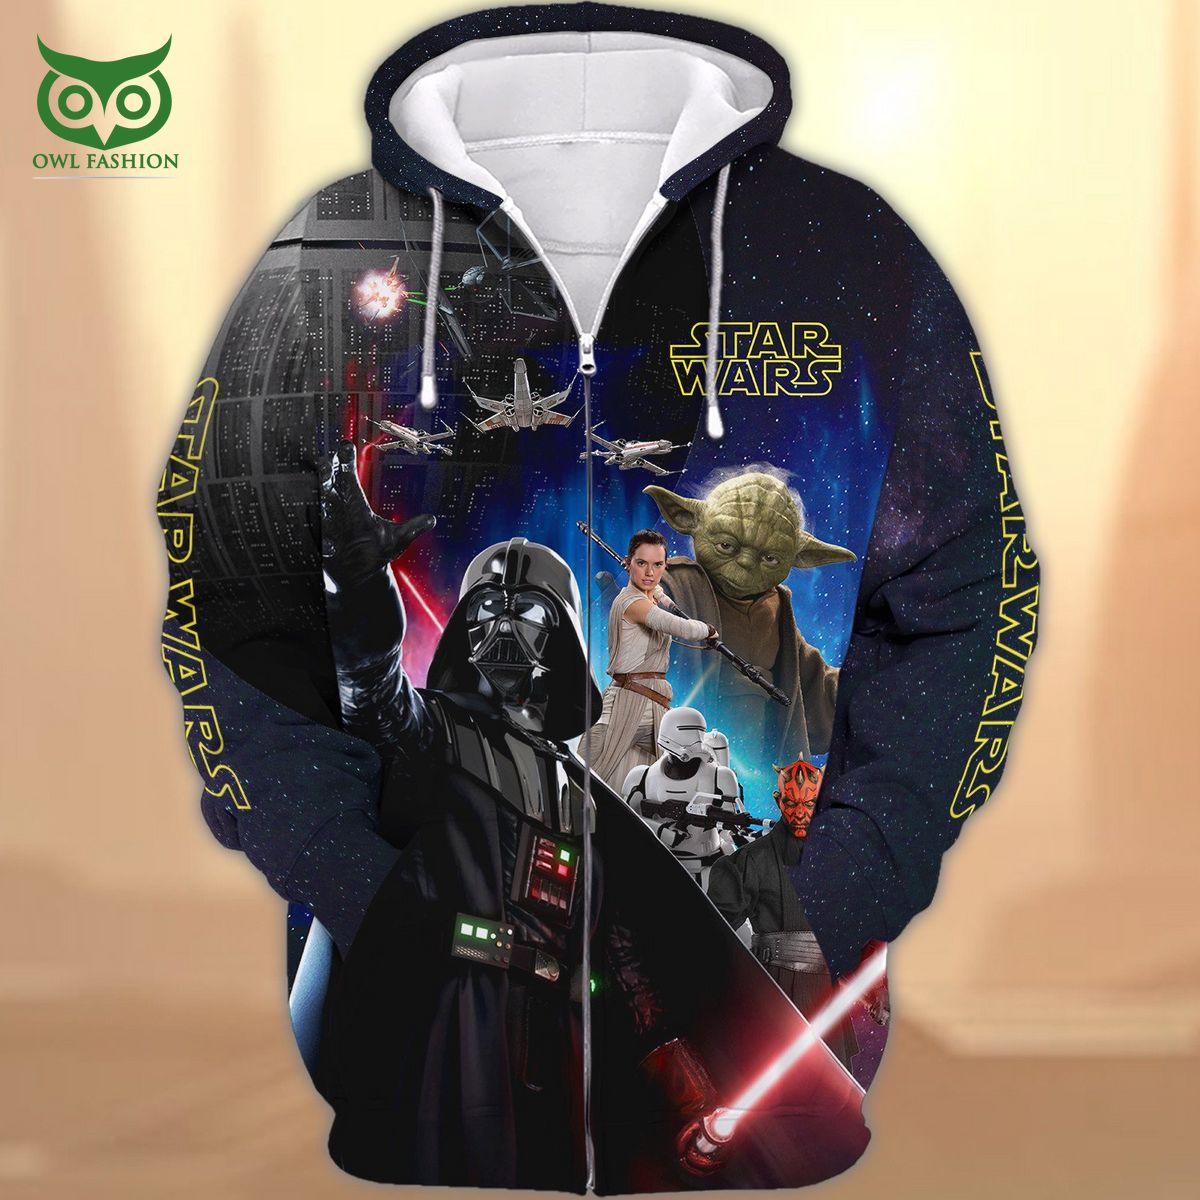 galaxy star wars movie 3d shirt hoodie polo 1 8ulcX